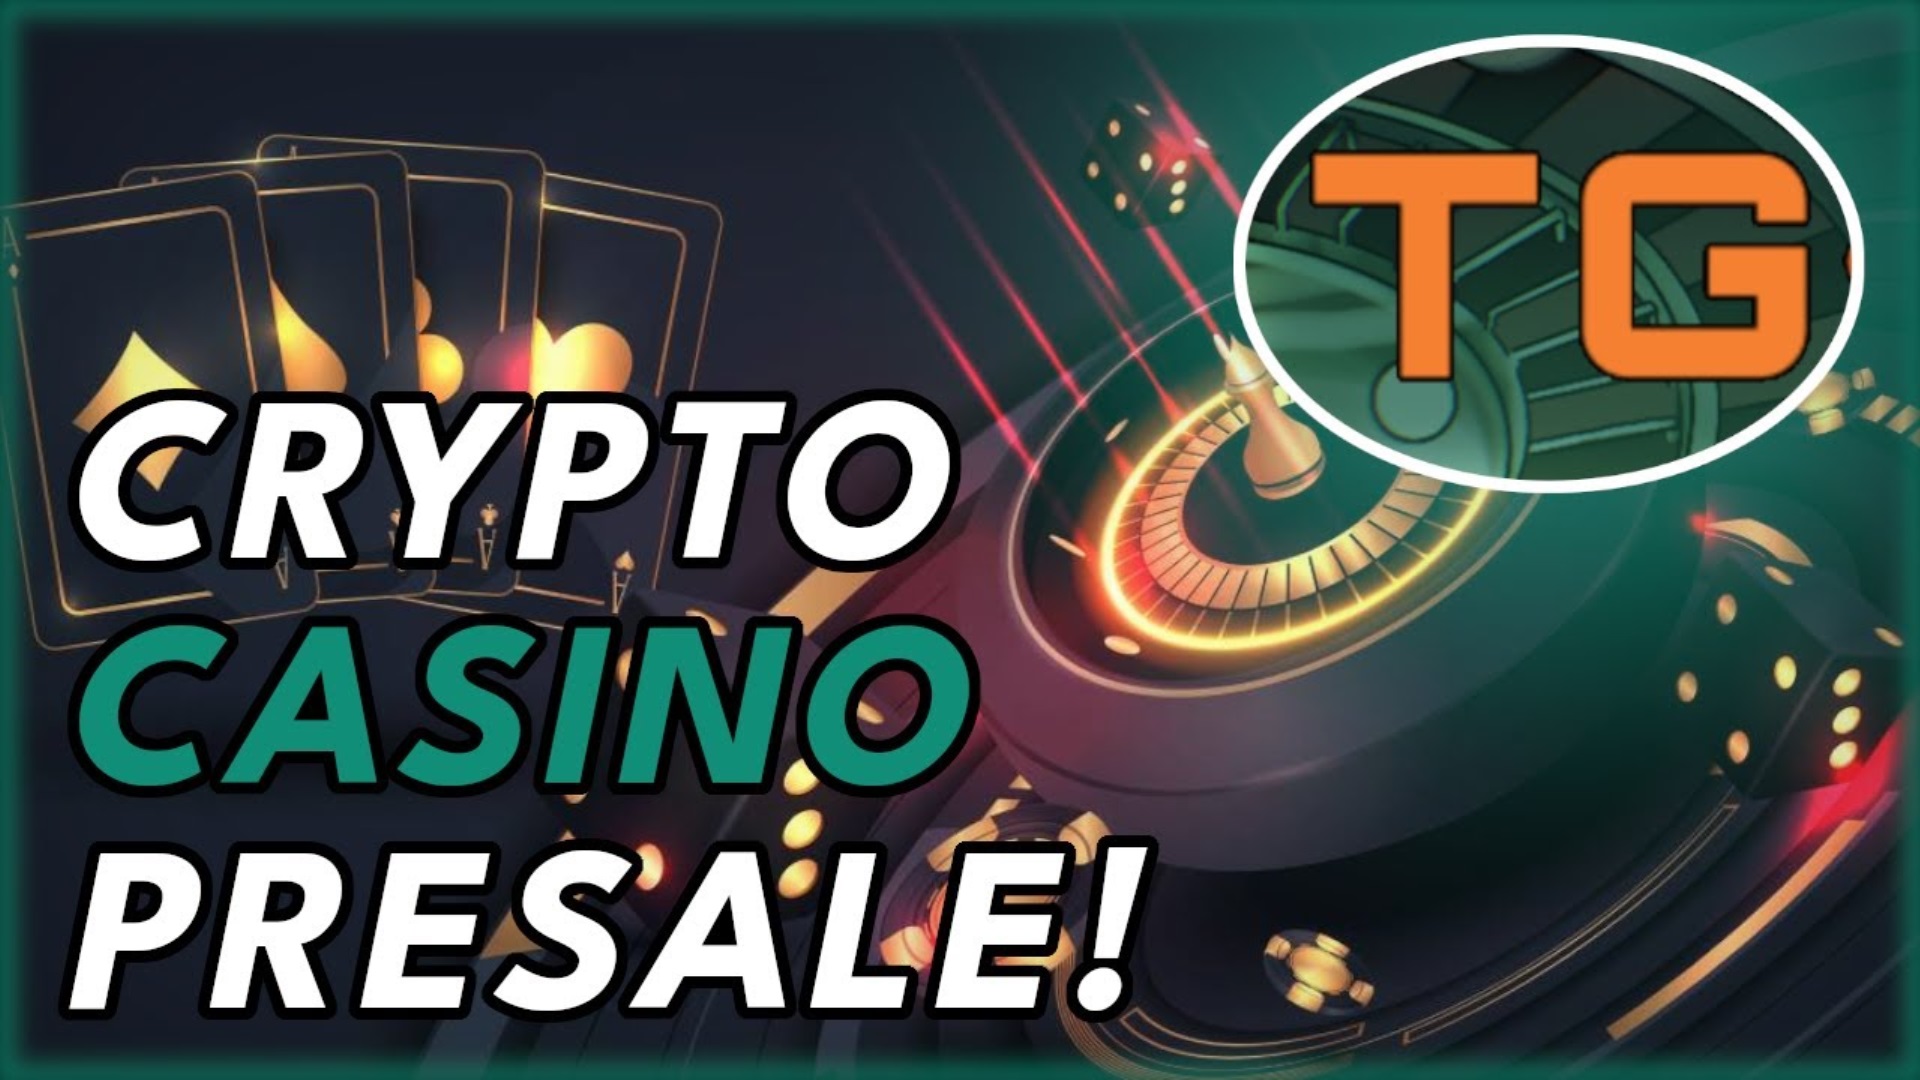 Cilinix Crypto Reviews World No.1 Telegram Casino’s Presale Could It Be the Next Big Crypto Trend?